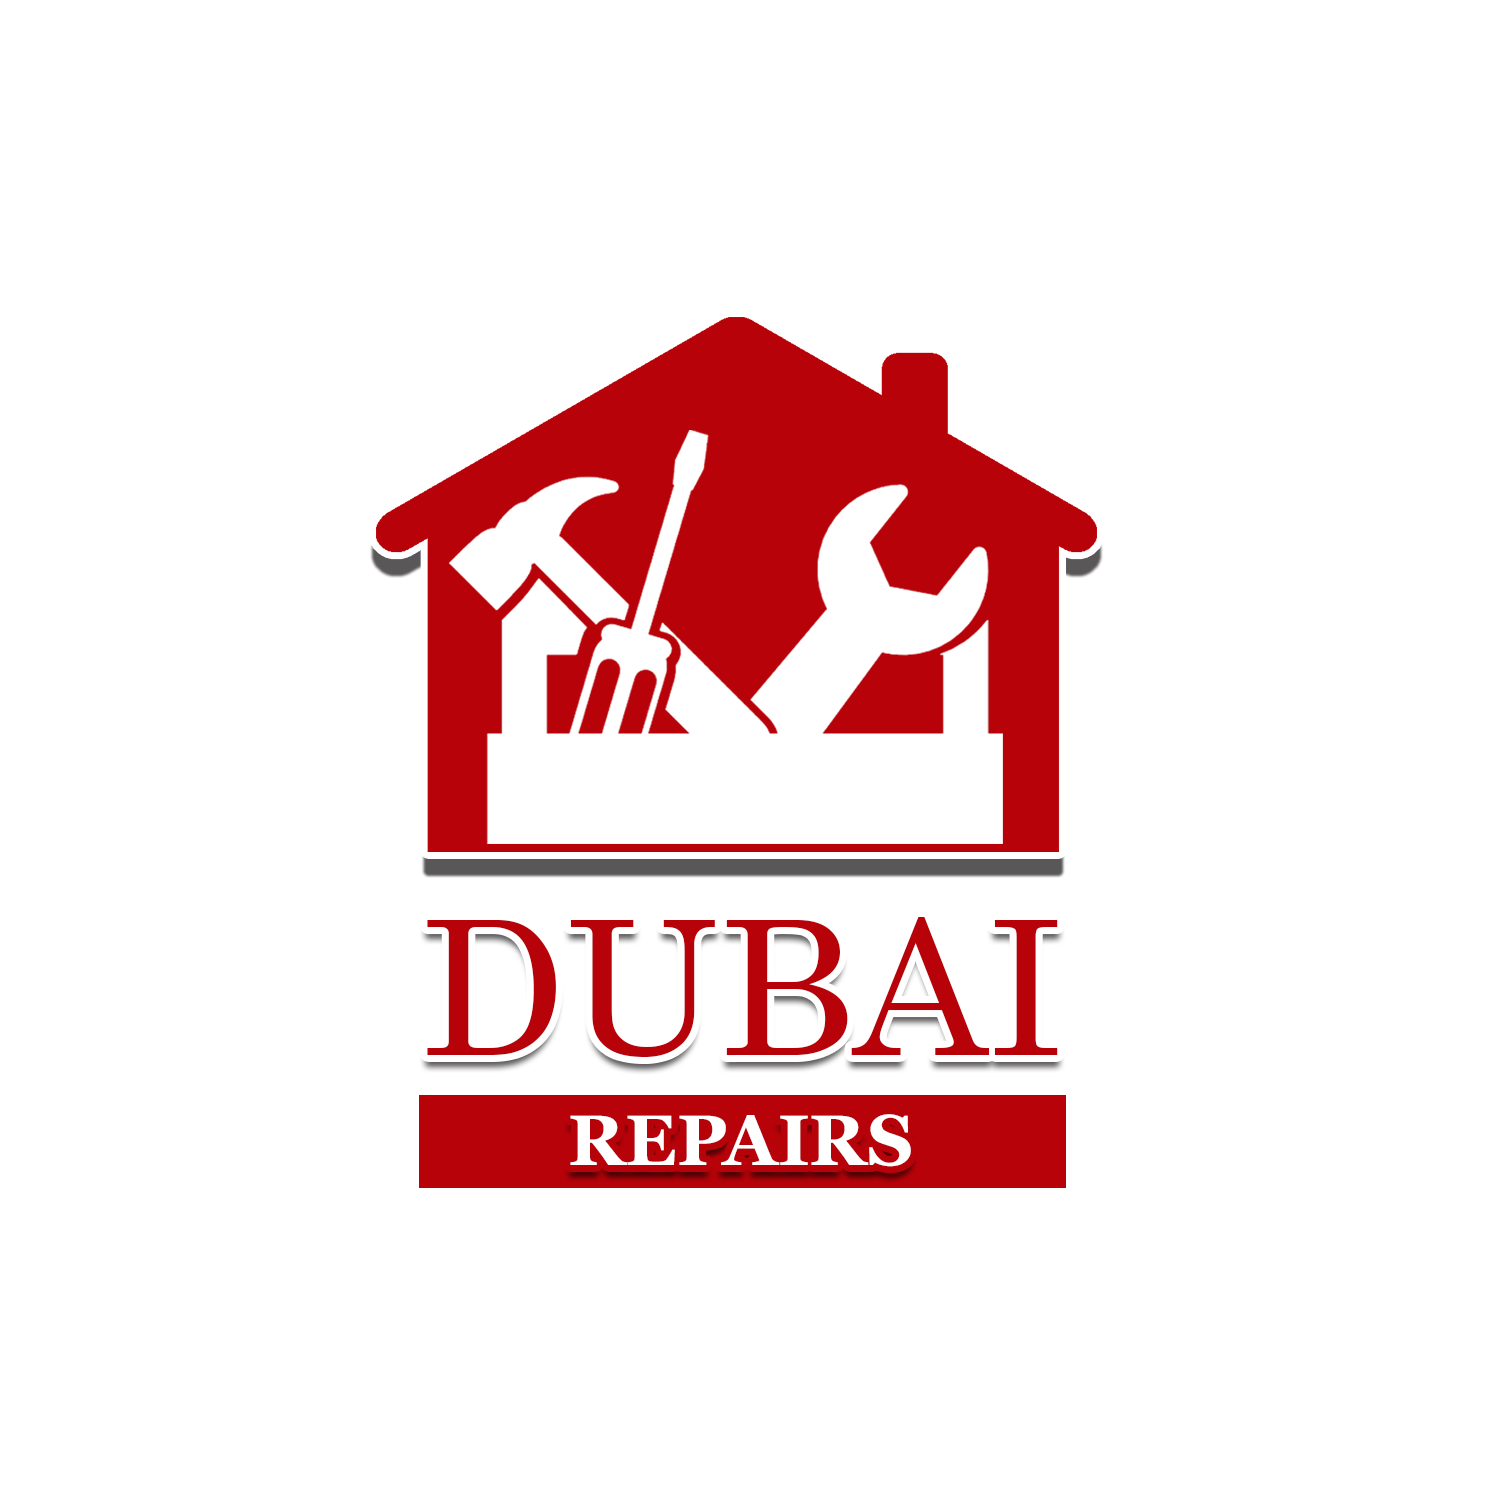 Dubai Repairs Logo